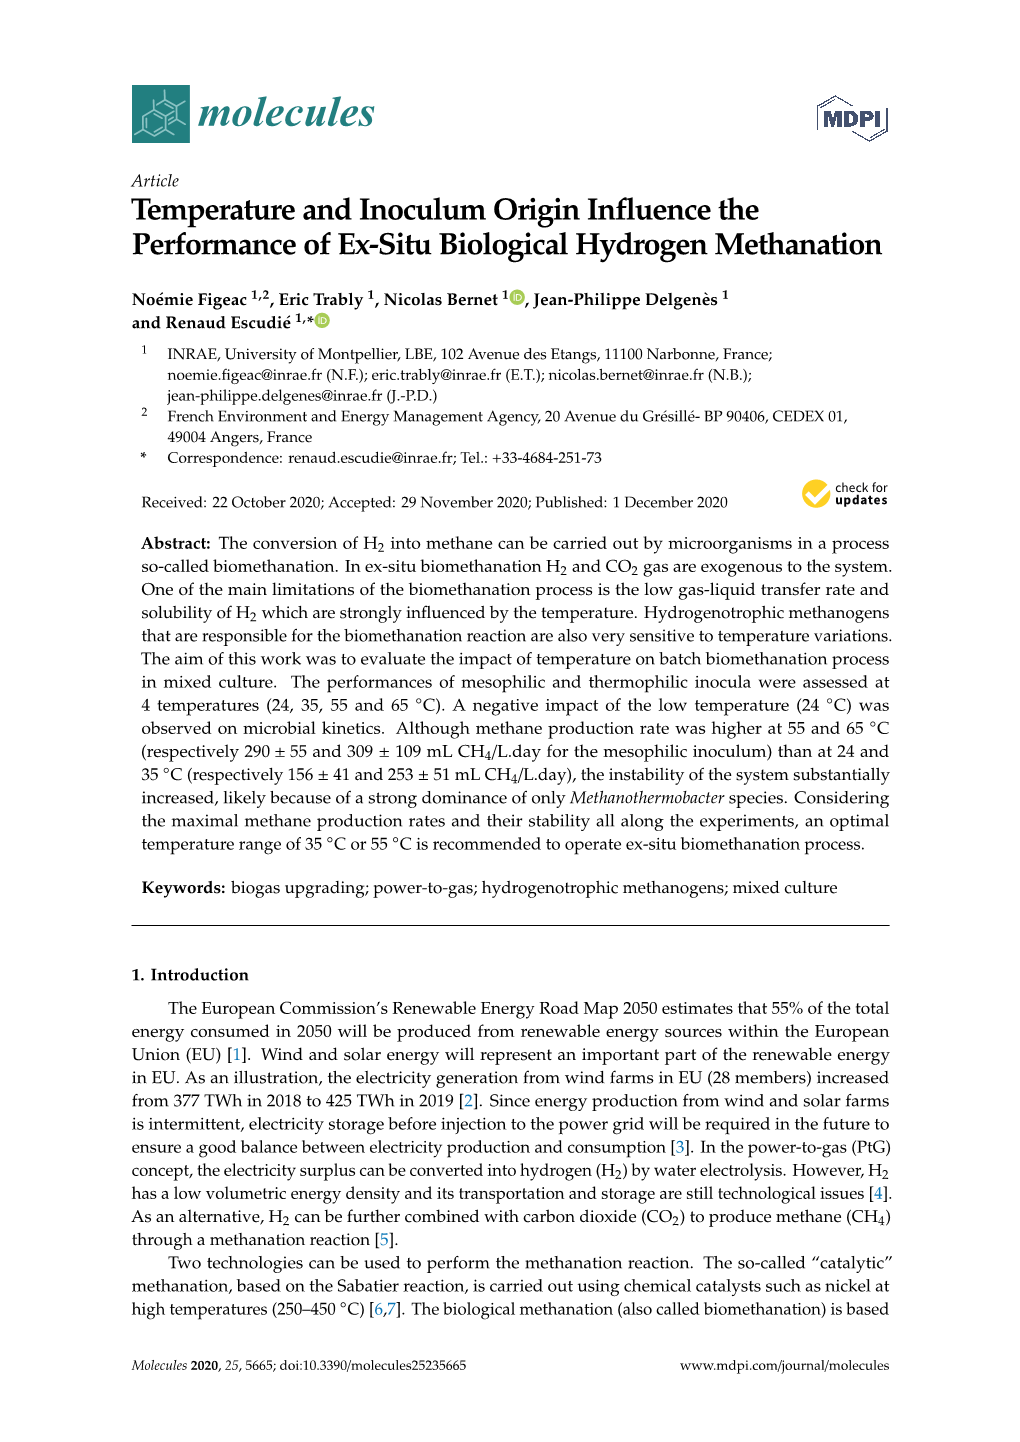 Temperature and Inoculum Origin Influence the Performance of Ex-Situ Biological Hydrogen Methanation